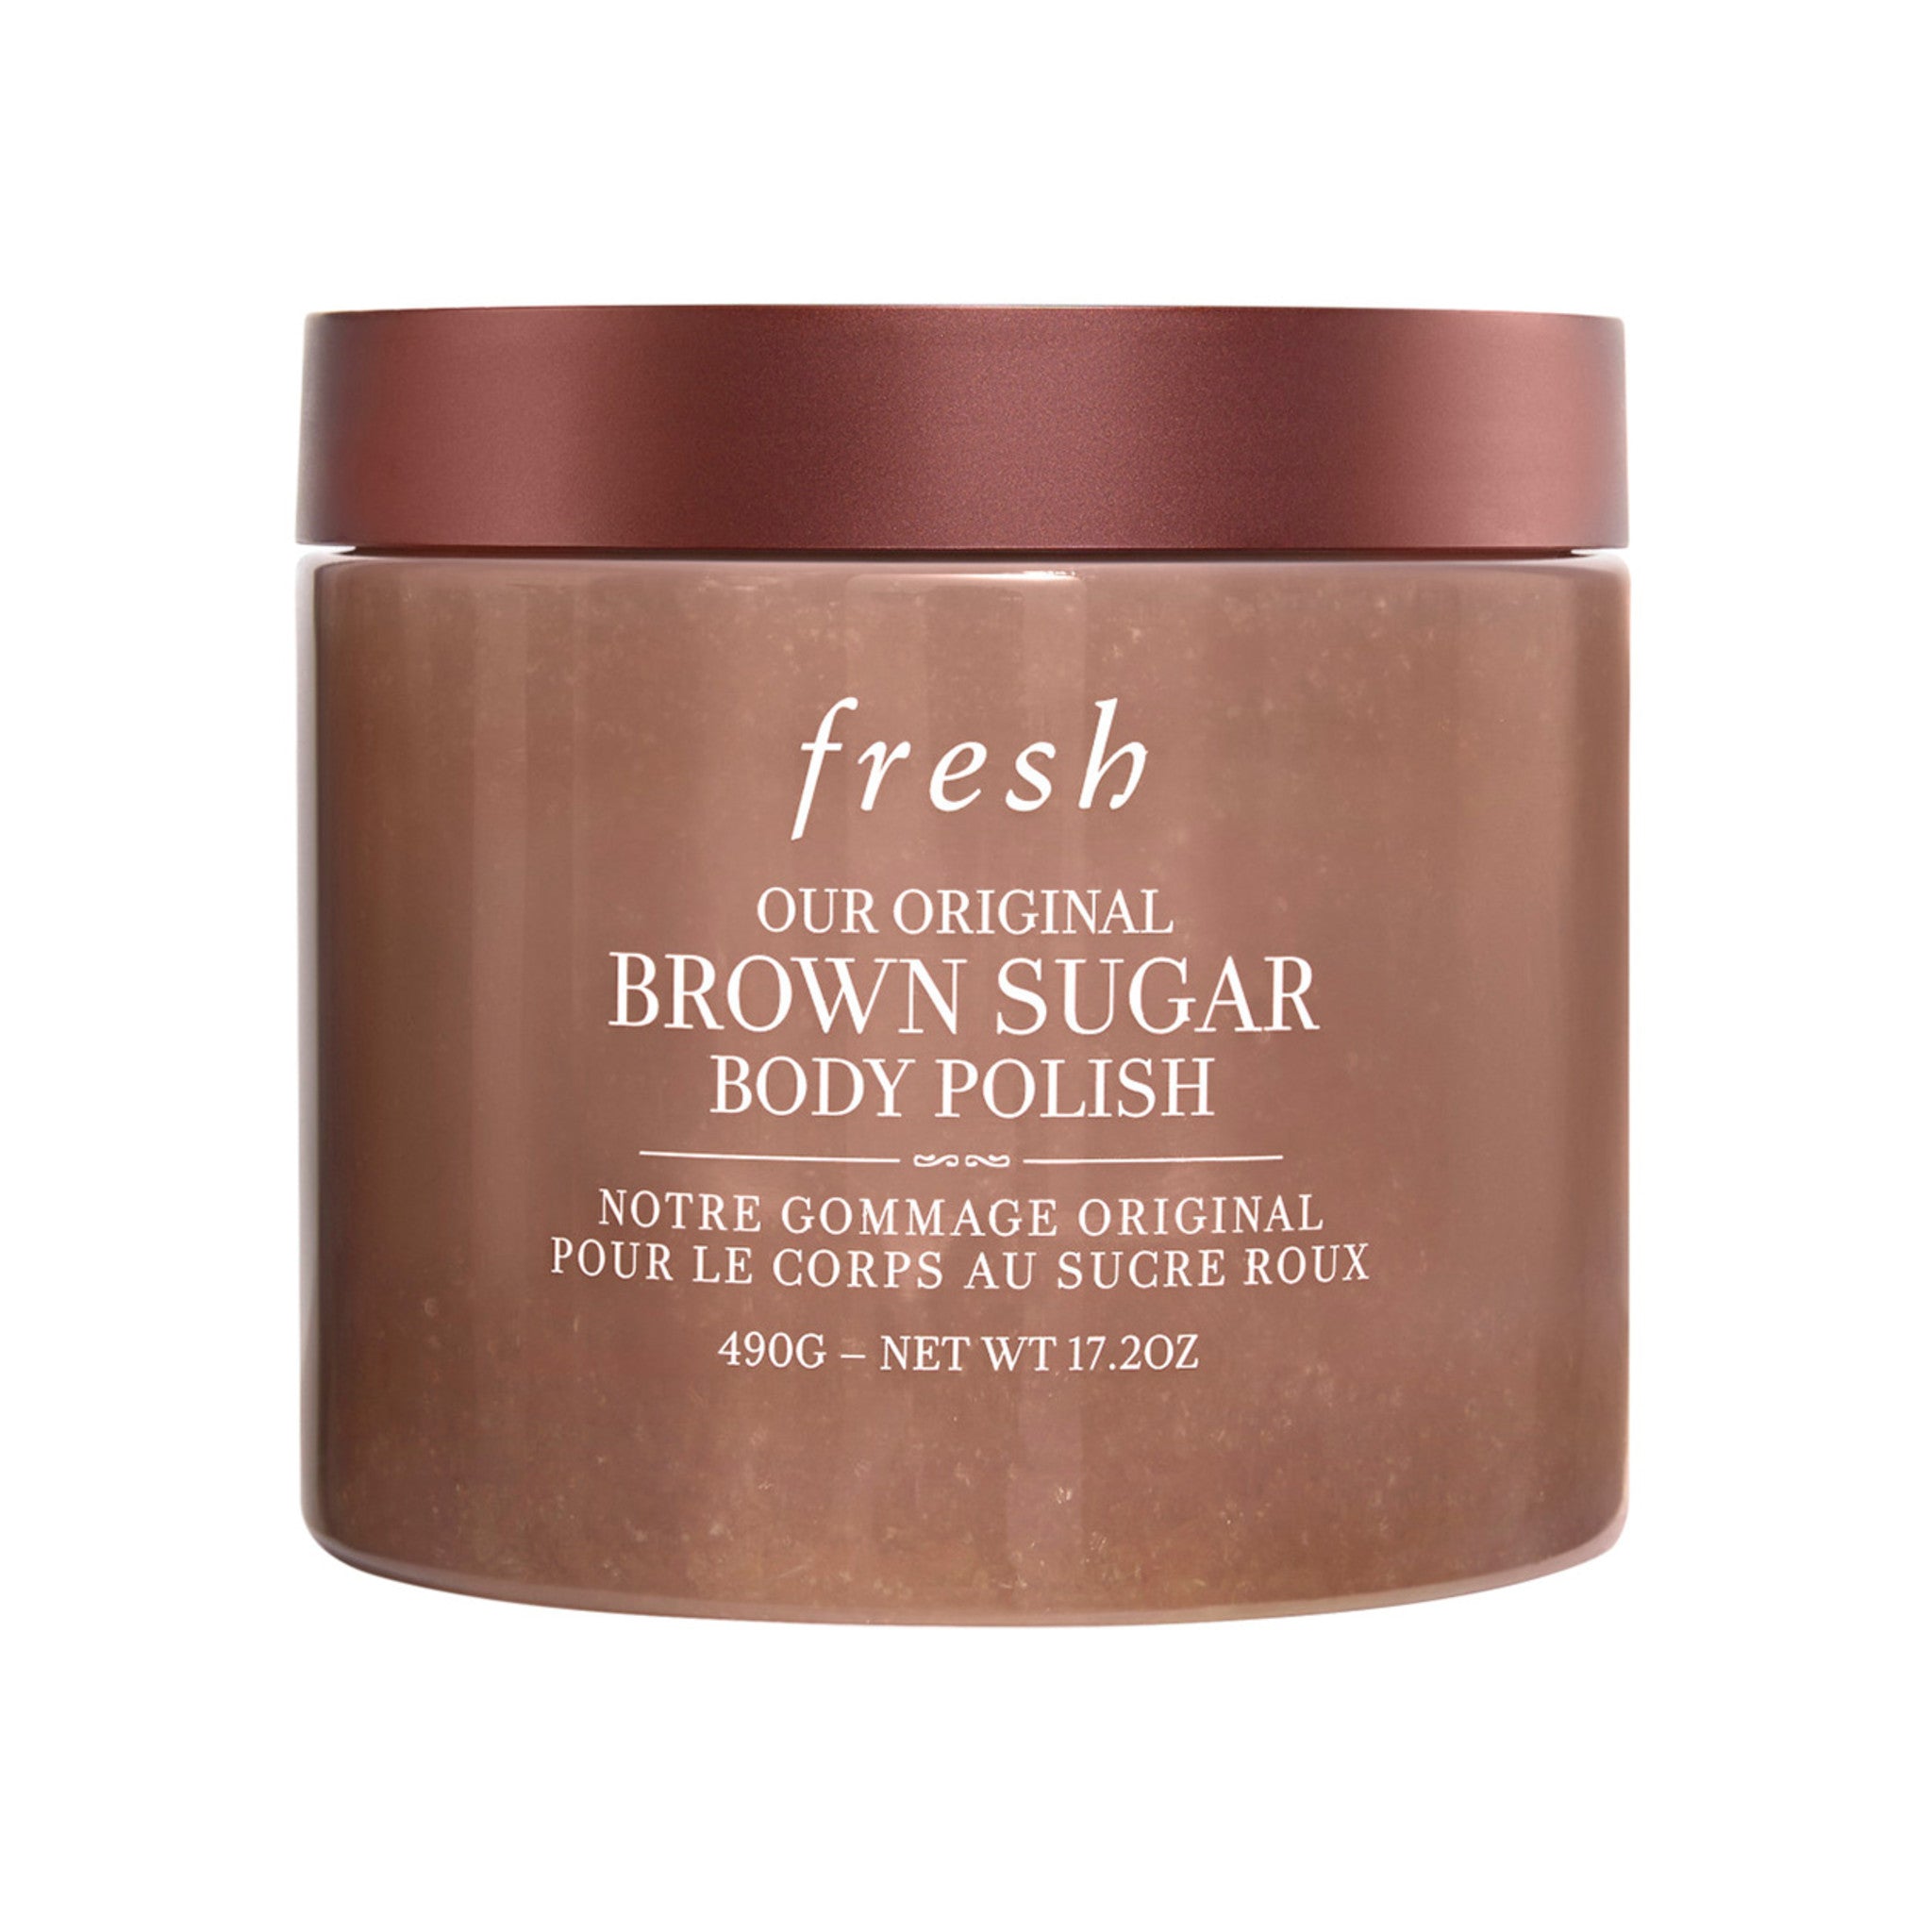 Fresh Brown Sugar Body Polish main image.